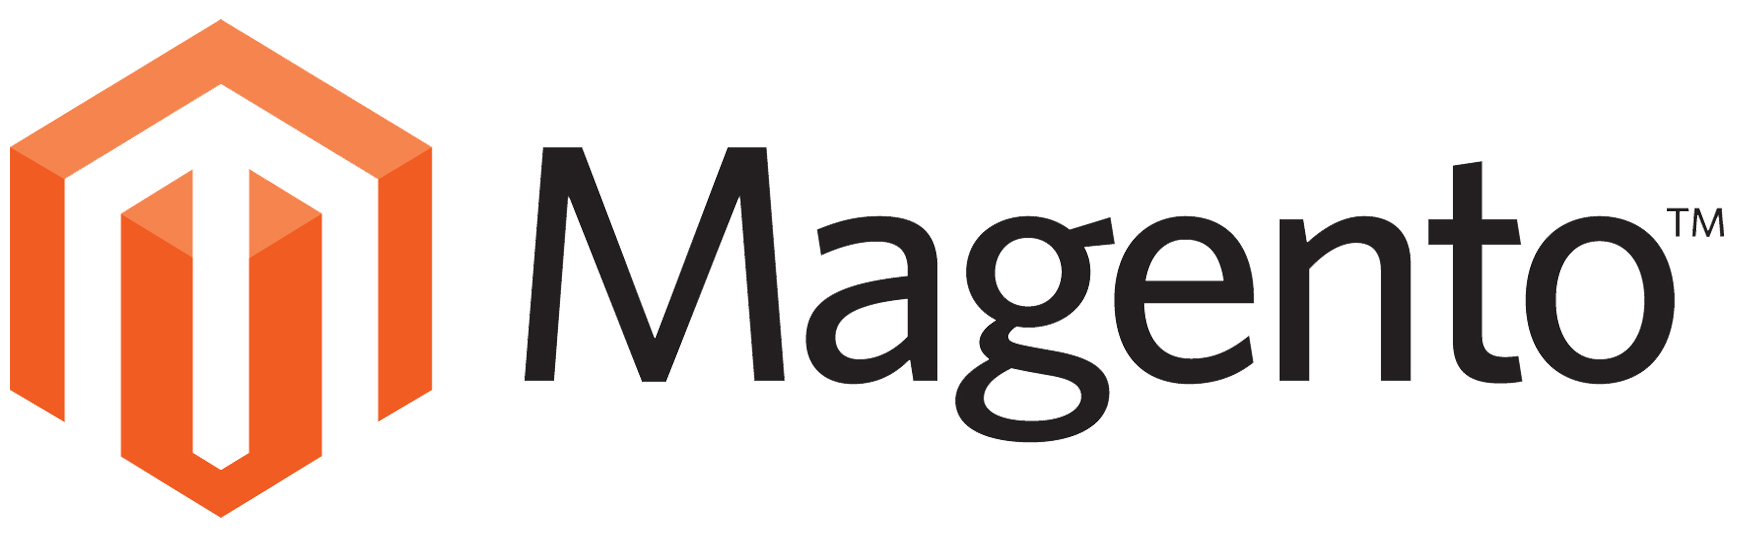 magento-large